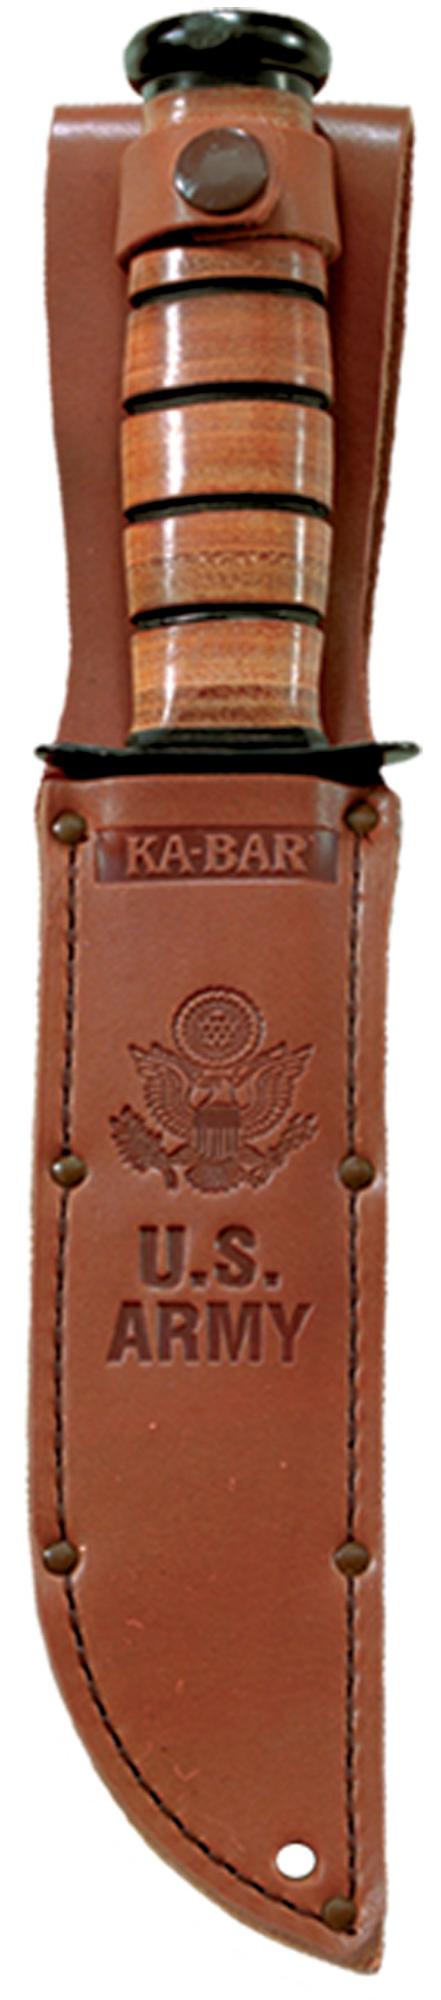 U.S. ARMY KA-BAR®, (Serrated Edge, Leather Sheath)